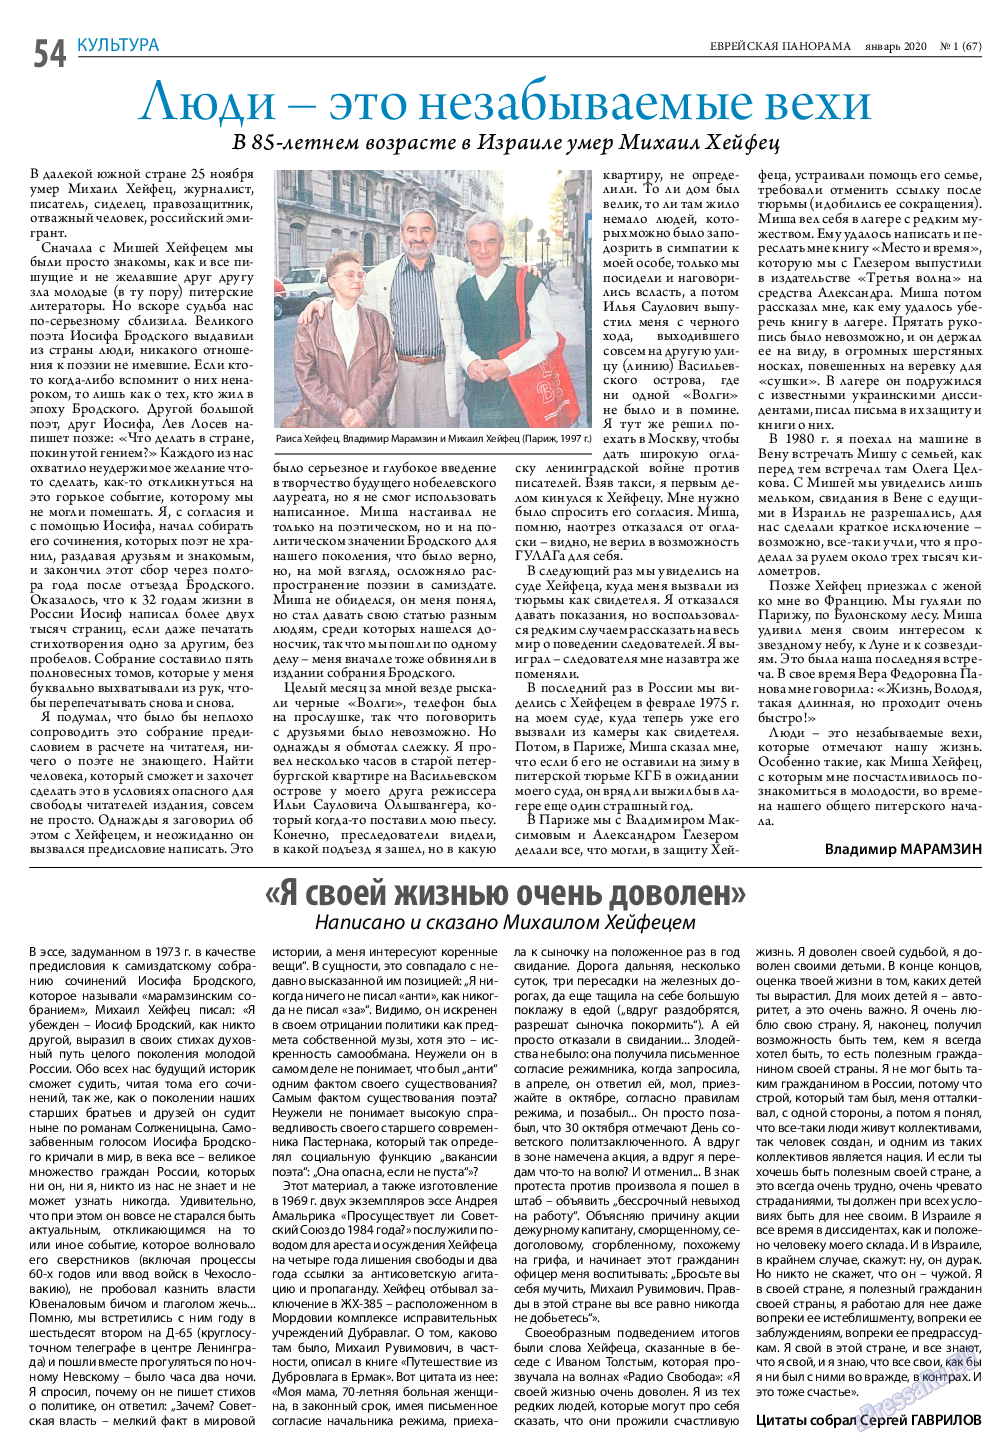 Еврейская панорама, газета. 2020 №1 стр.54